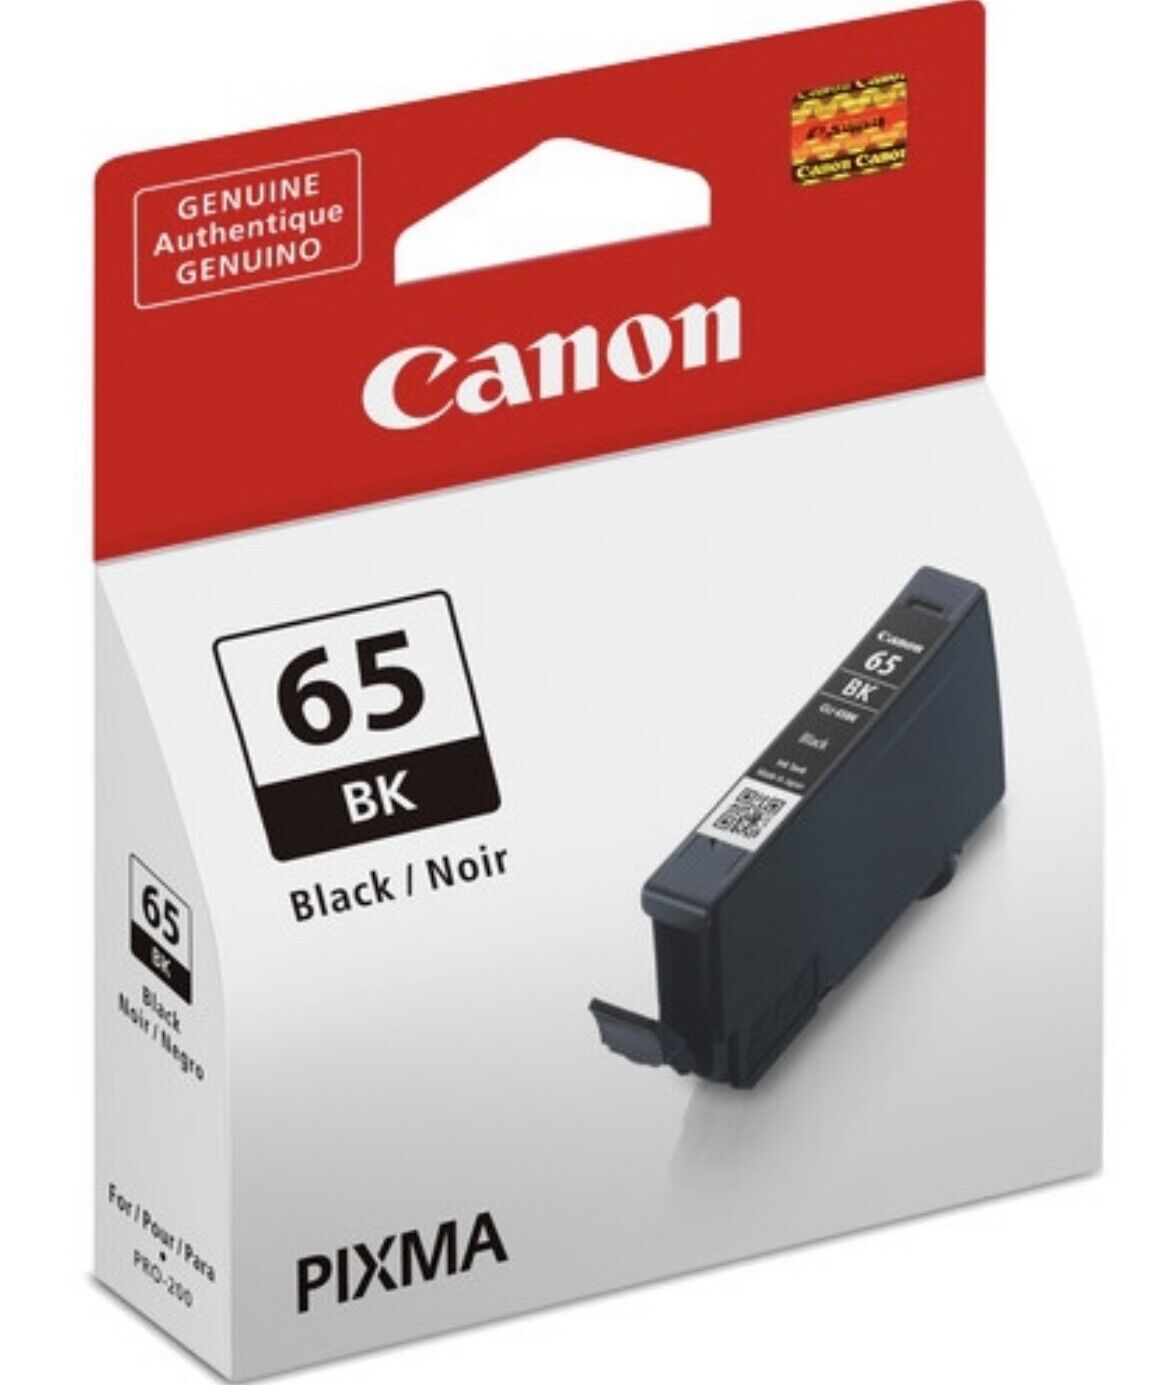 Genuine Canon CLI-65 Individual Black Ink Only for PIXMA Pro-200 Printer